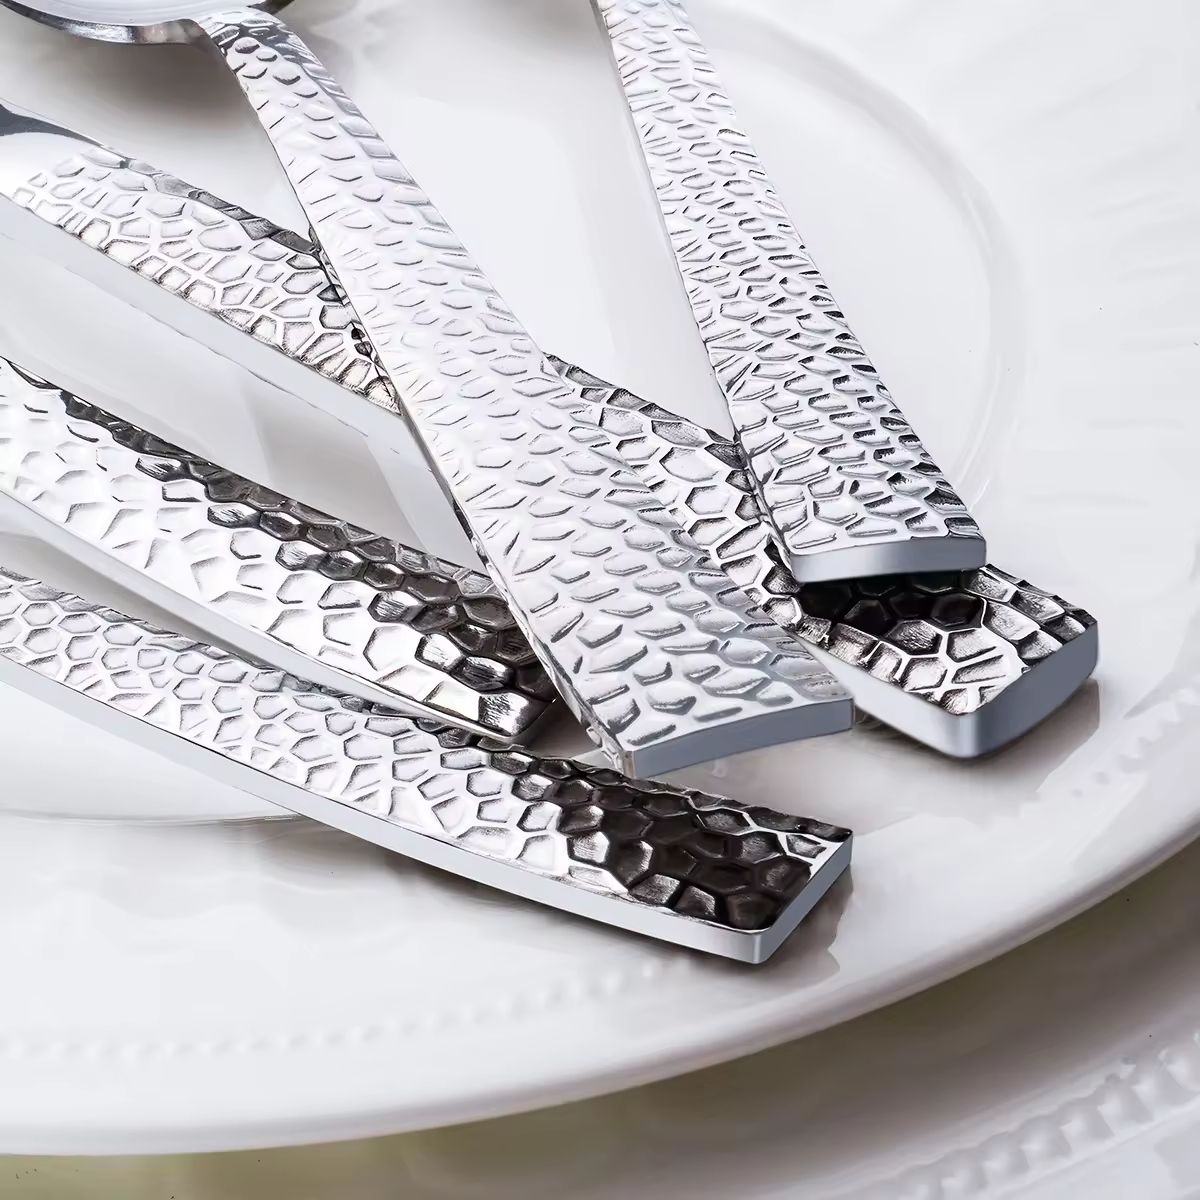 Hammered Cutlery Set with Knife Fork Spoon, Stainless Steel Flatware Set, Besteck Set High-Quality, Dishwasher Safe